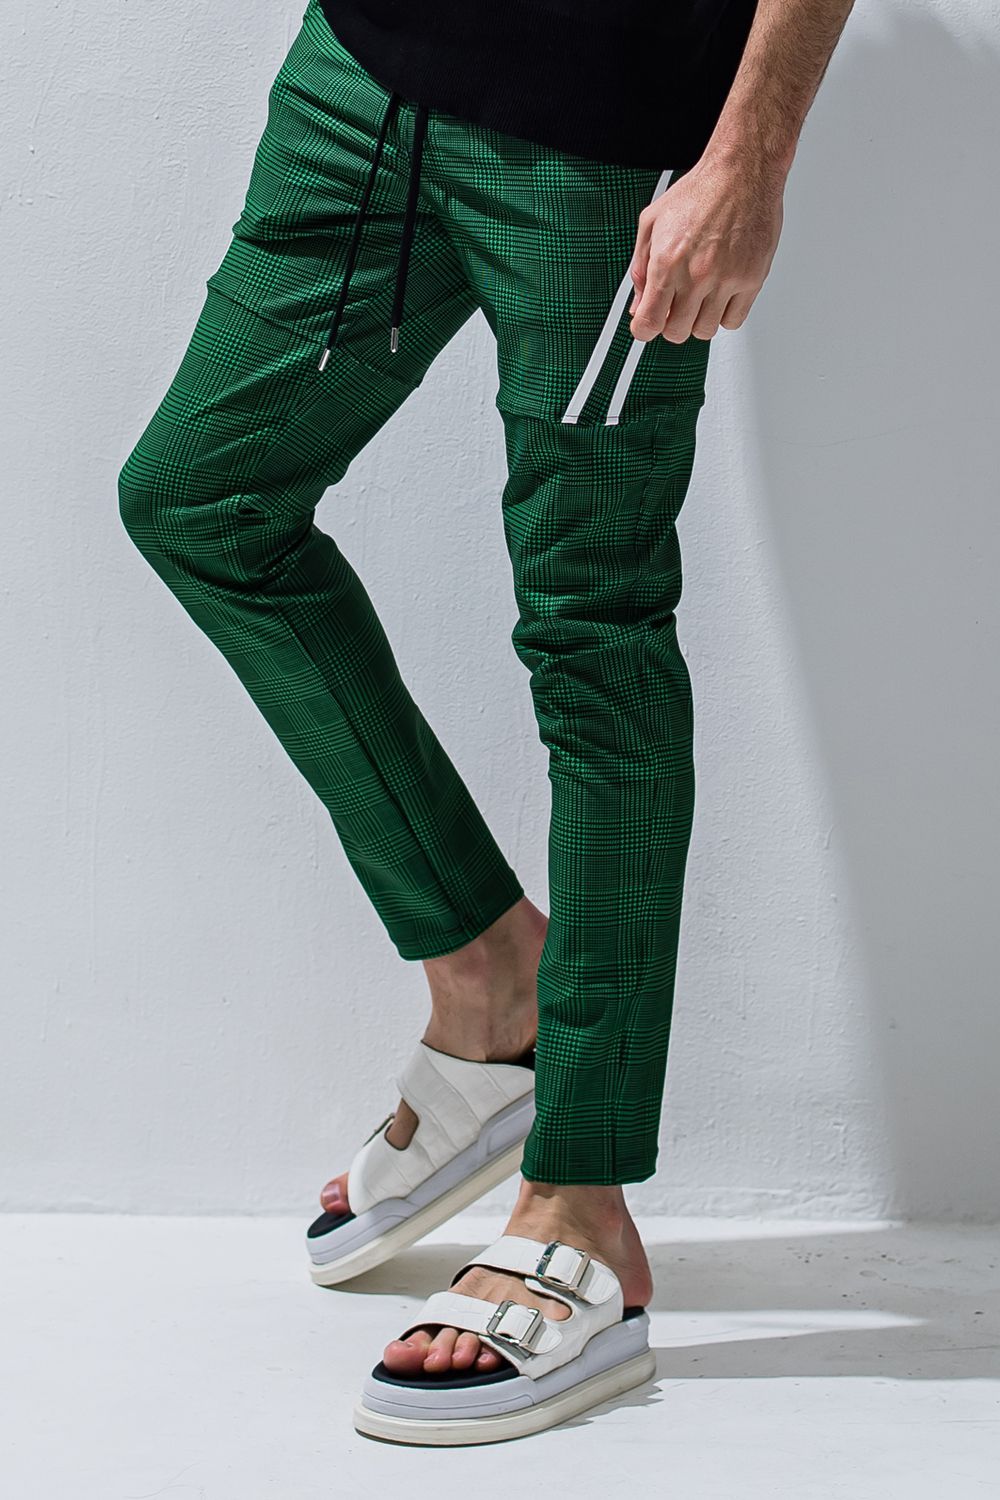 RESOUND CLOTHING - TYLER LINE PANTS / タイラー ライン パンツ